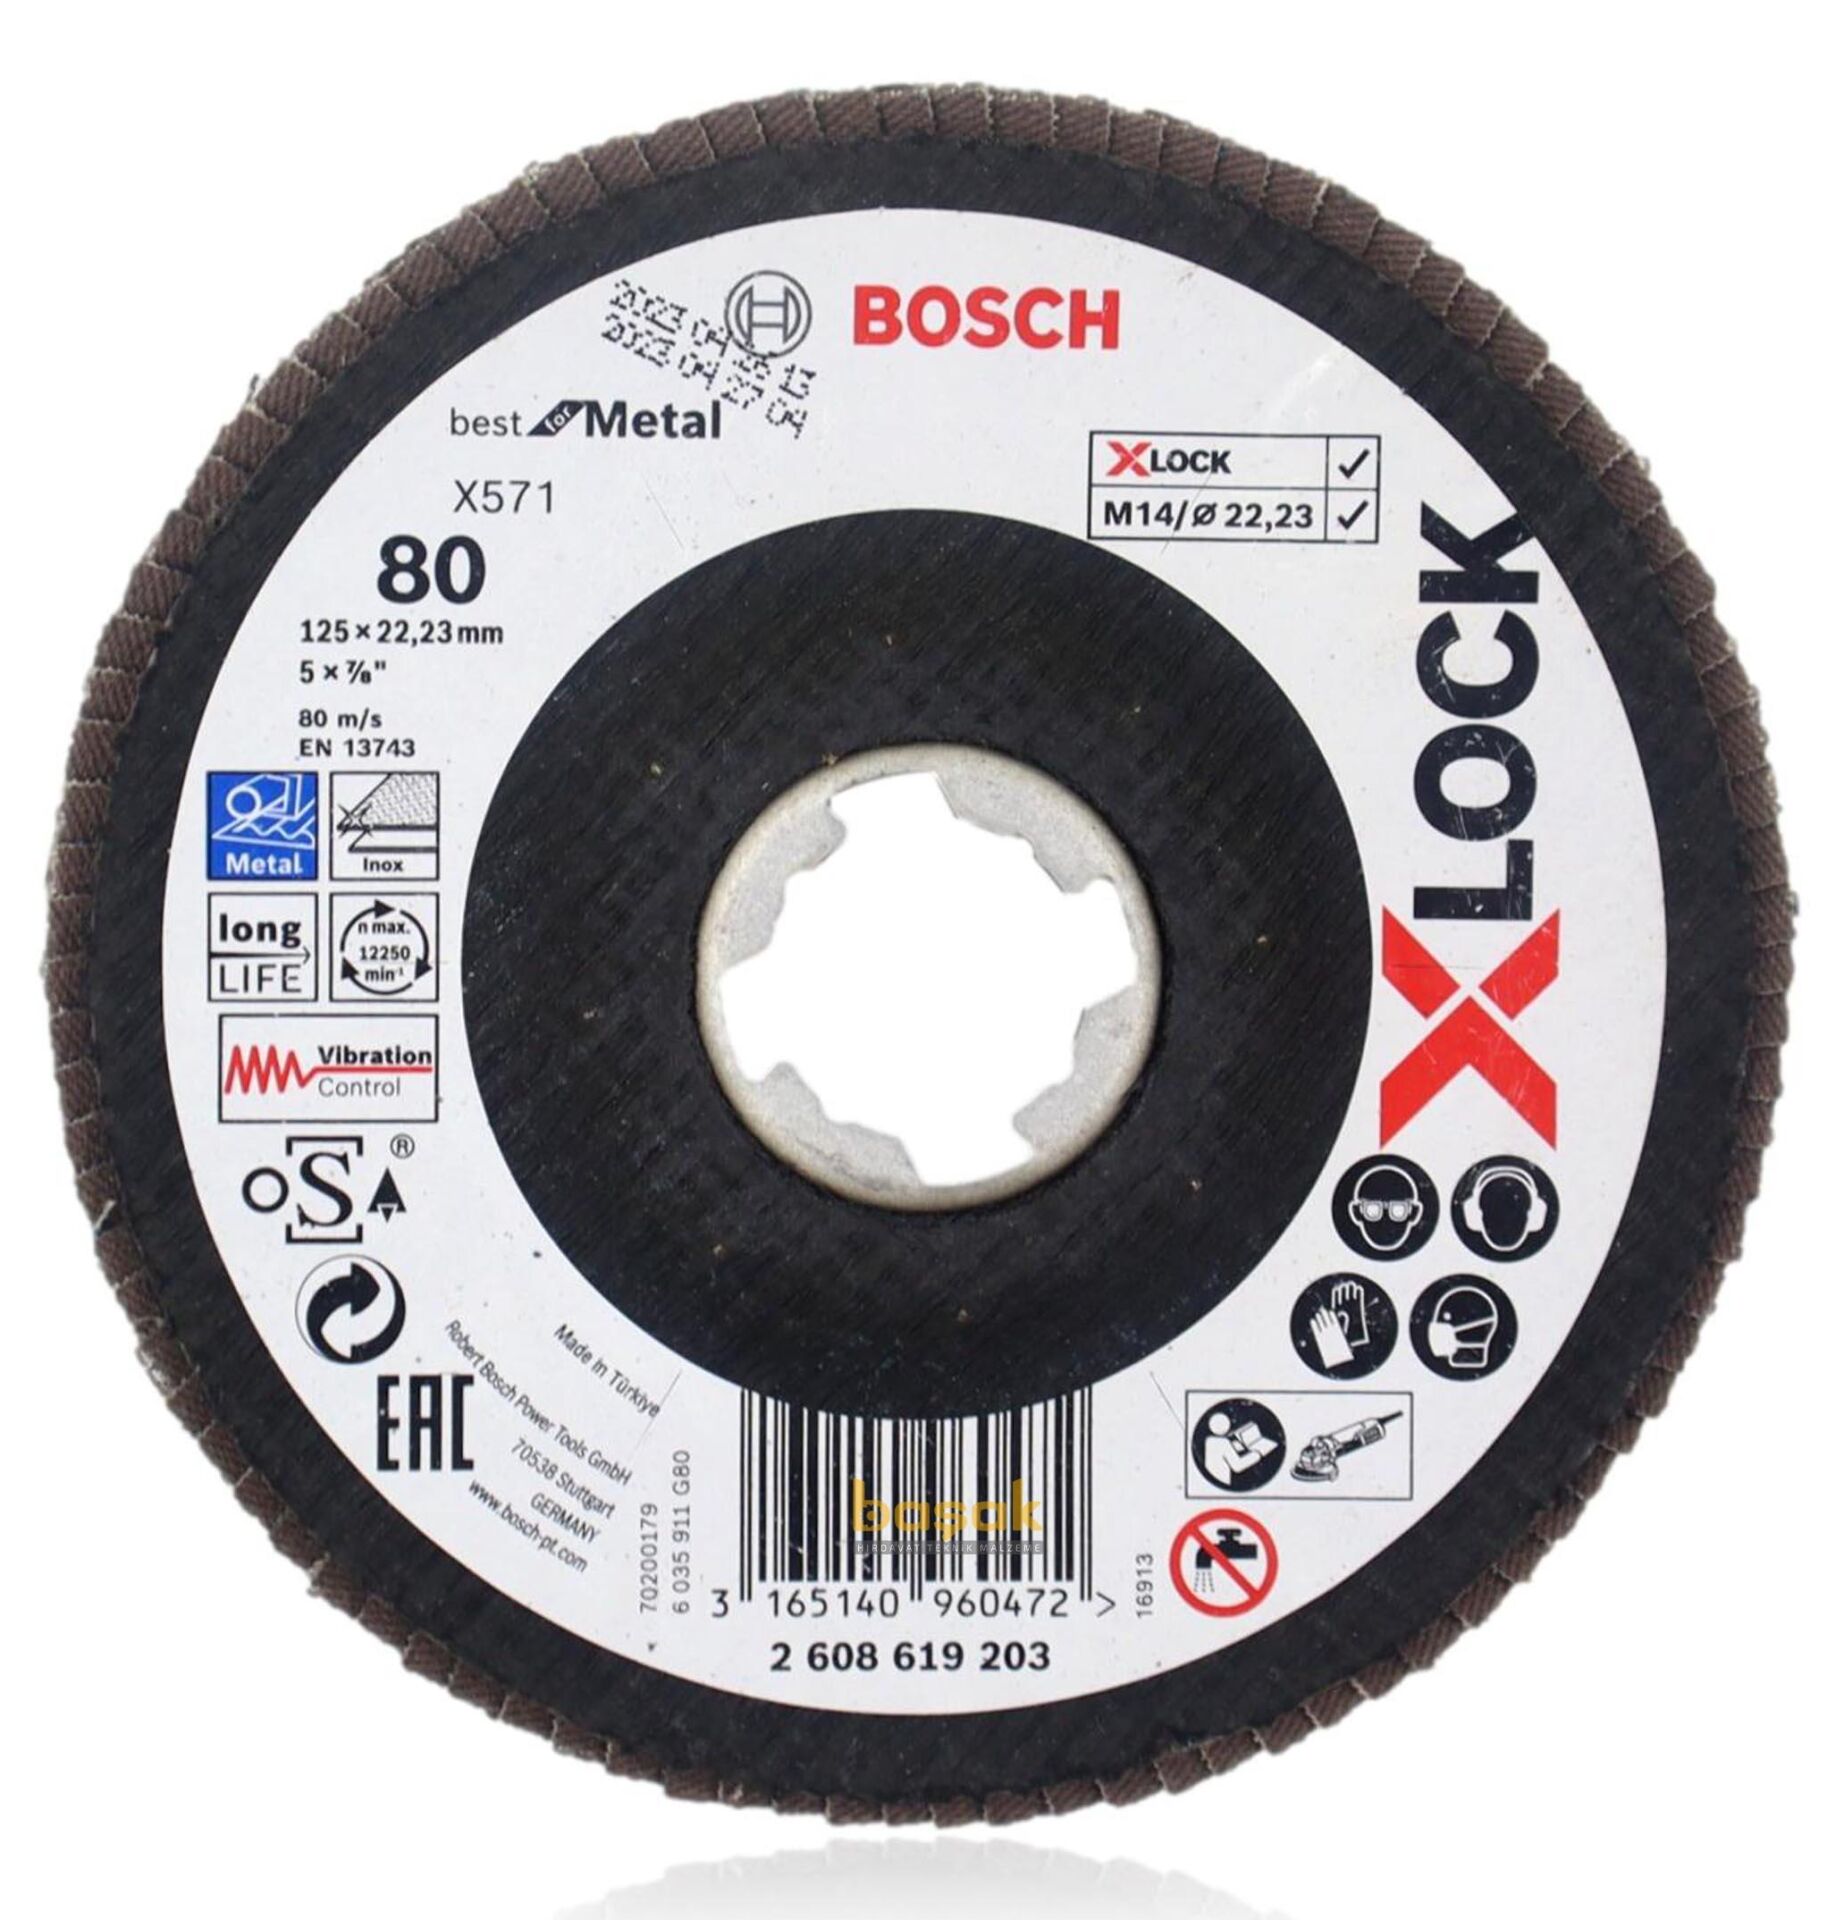 Bosch X-LOCK 125 mm 80 Kum Best Serisi Metal Flap Disk 2608619203